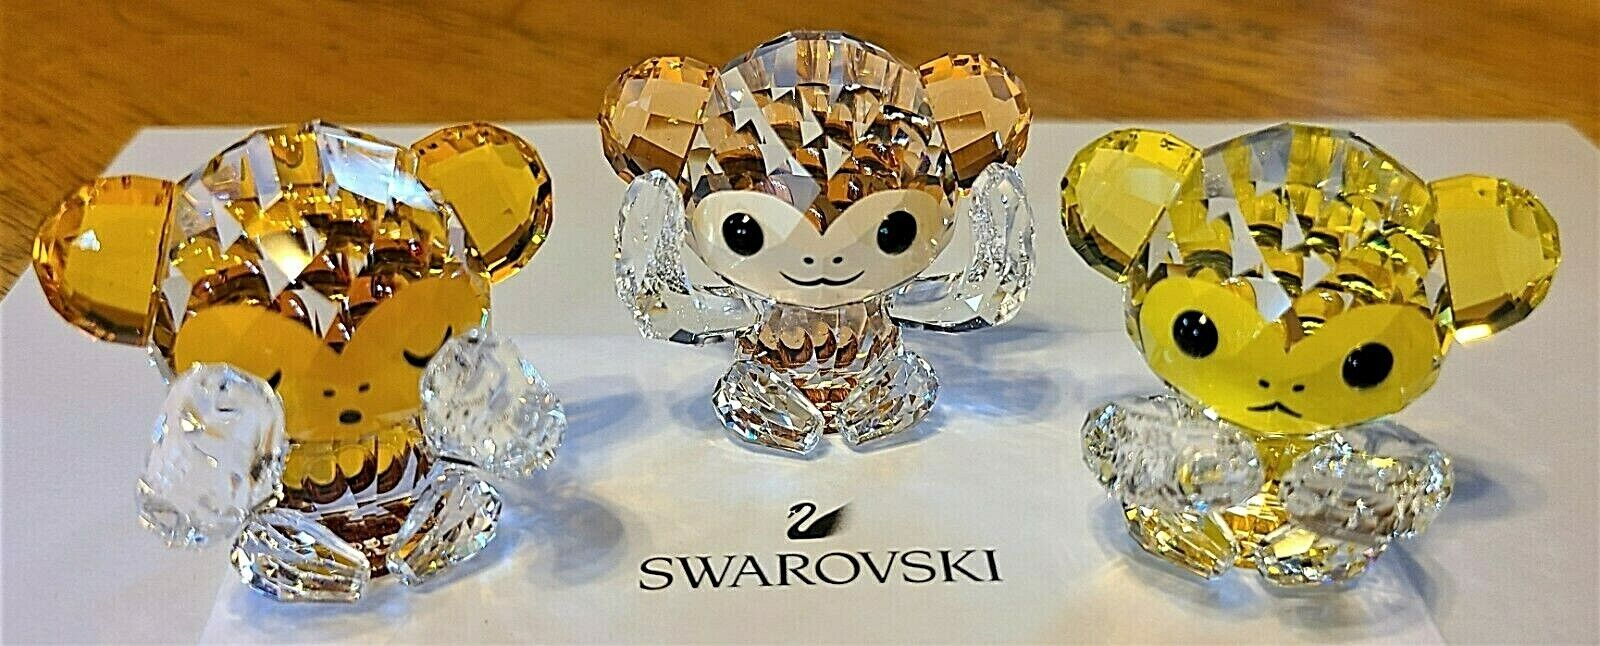 Swarovski Crystal 2019 Limited Ed. Asian Icons, 3 Wise Monkeys Figurine Set, NIB